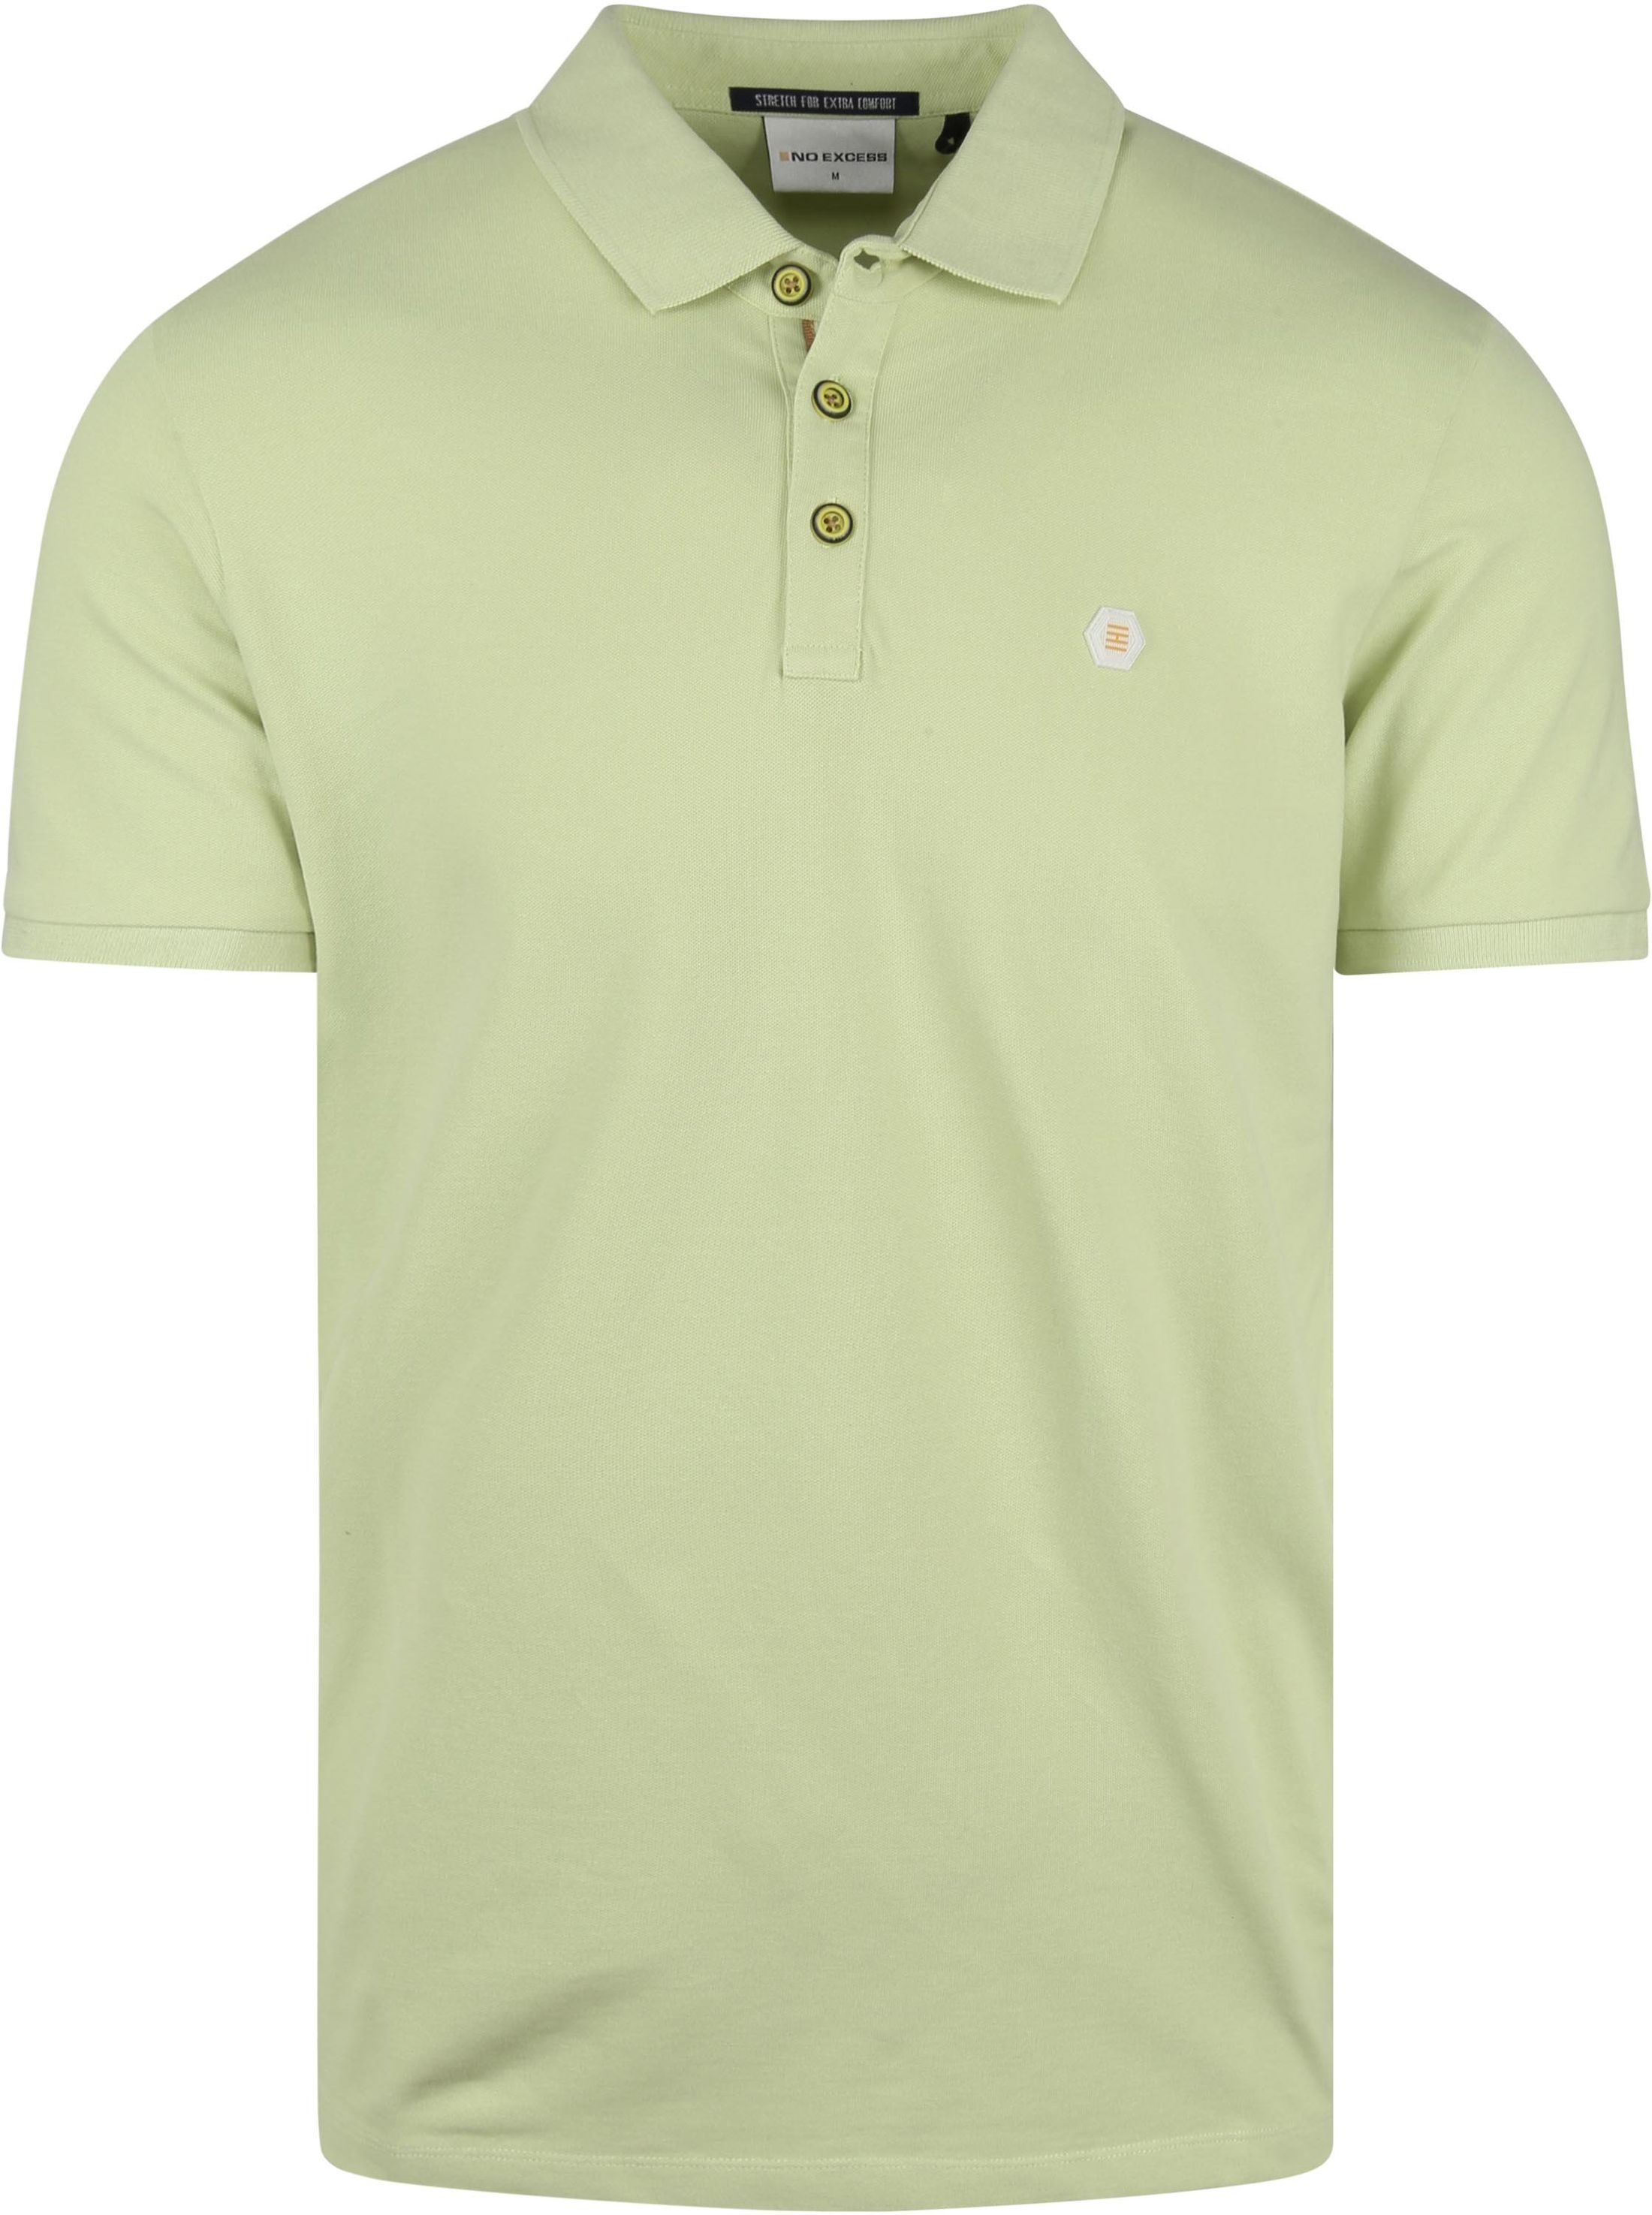 No-Excess Polo Shirt Mint Green size 3XL